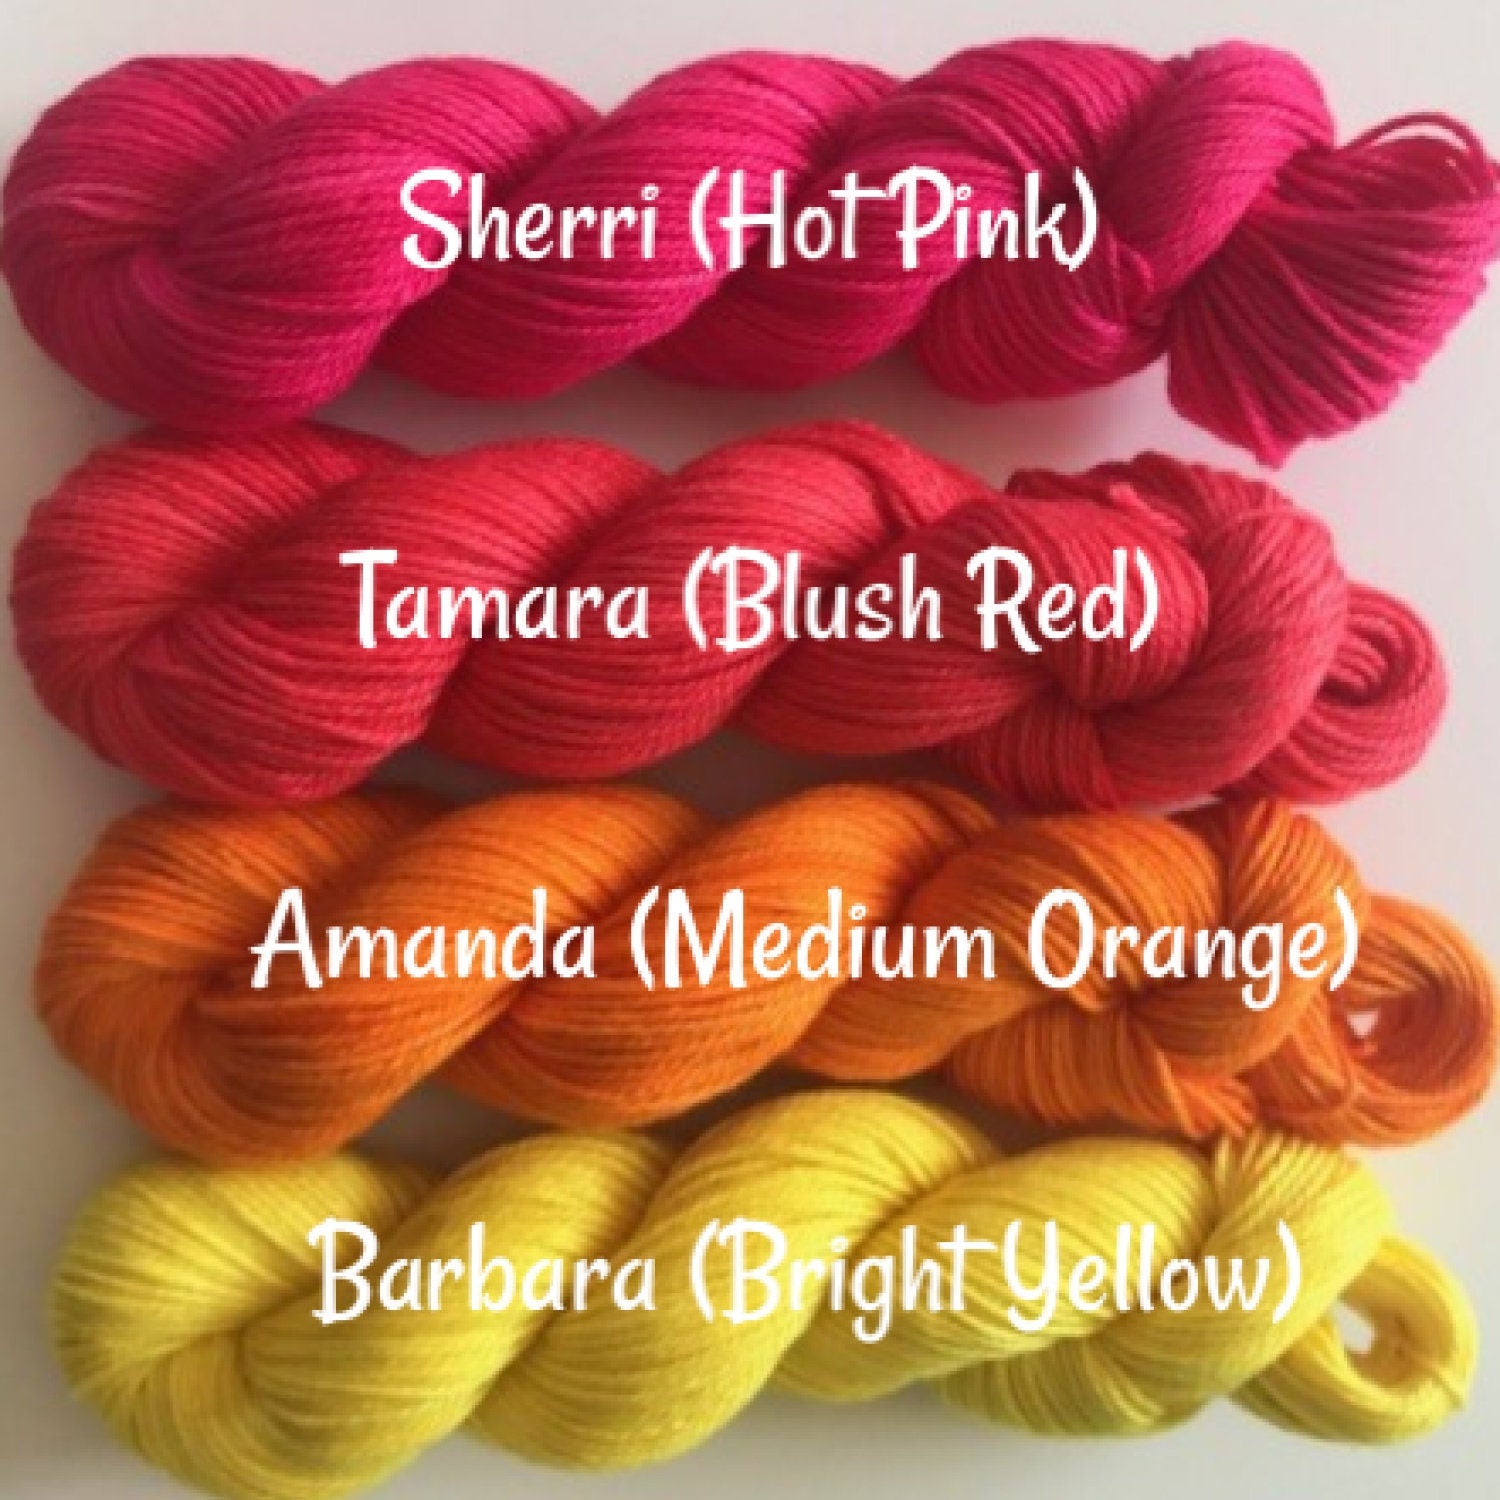 Hand Dyed Vegan Yarn Kit - Neon Rainbow - Fingering / Sock Wt Thread - Bamboo Cotton Blend - 3 Ply Soft Artisan Fiber - Semi Solids / Tonals